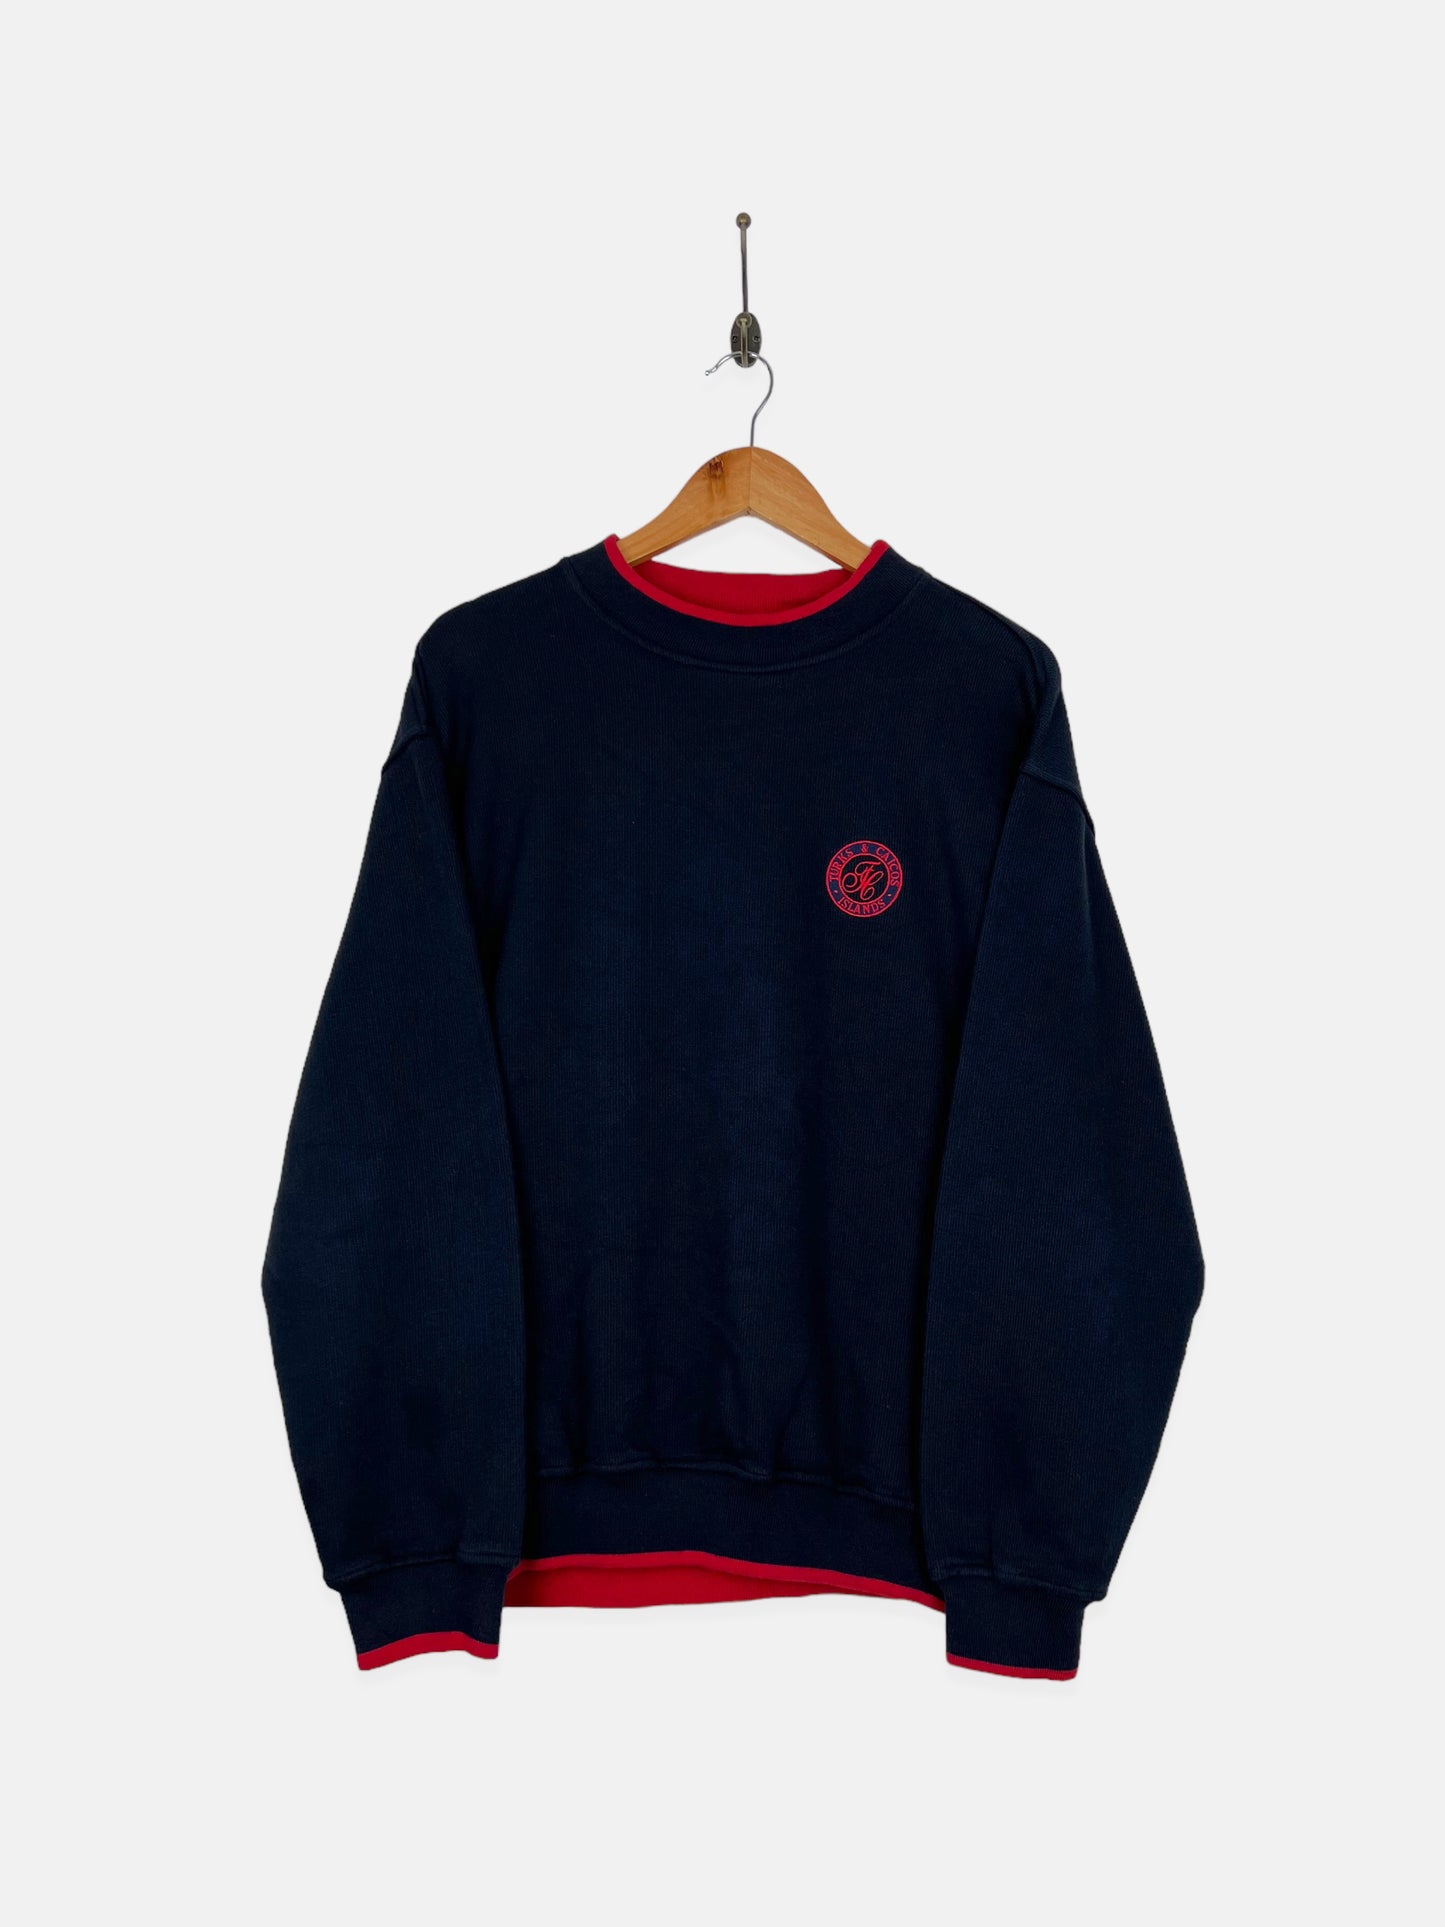 90's Turks & Caicos Embroidered Vintage Sweatshirt Size M